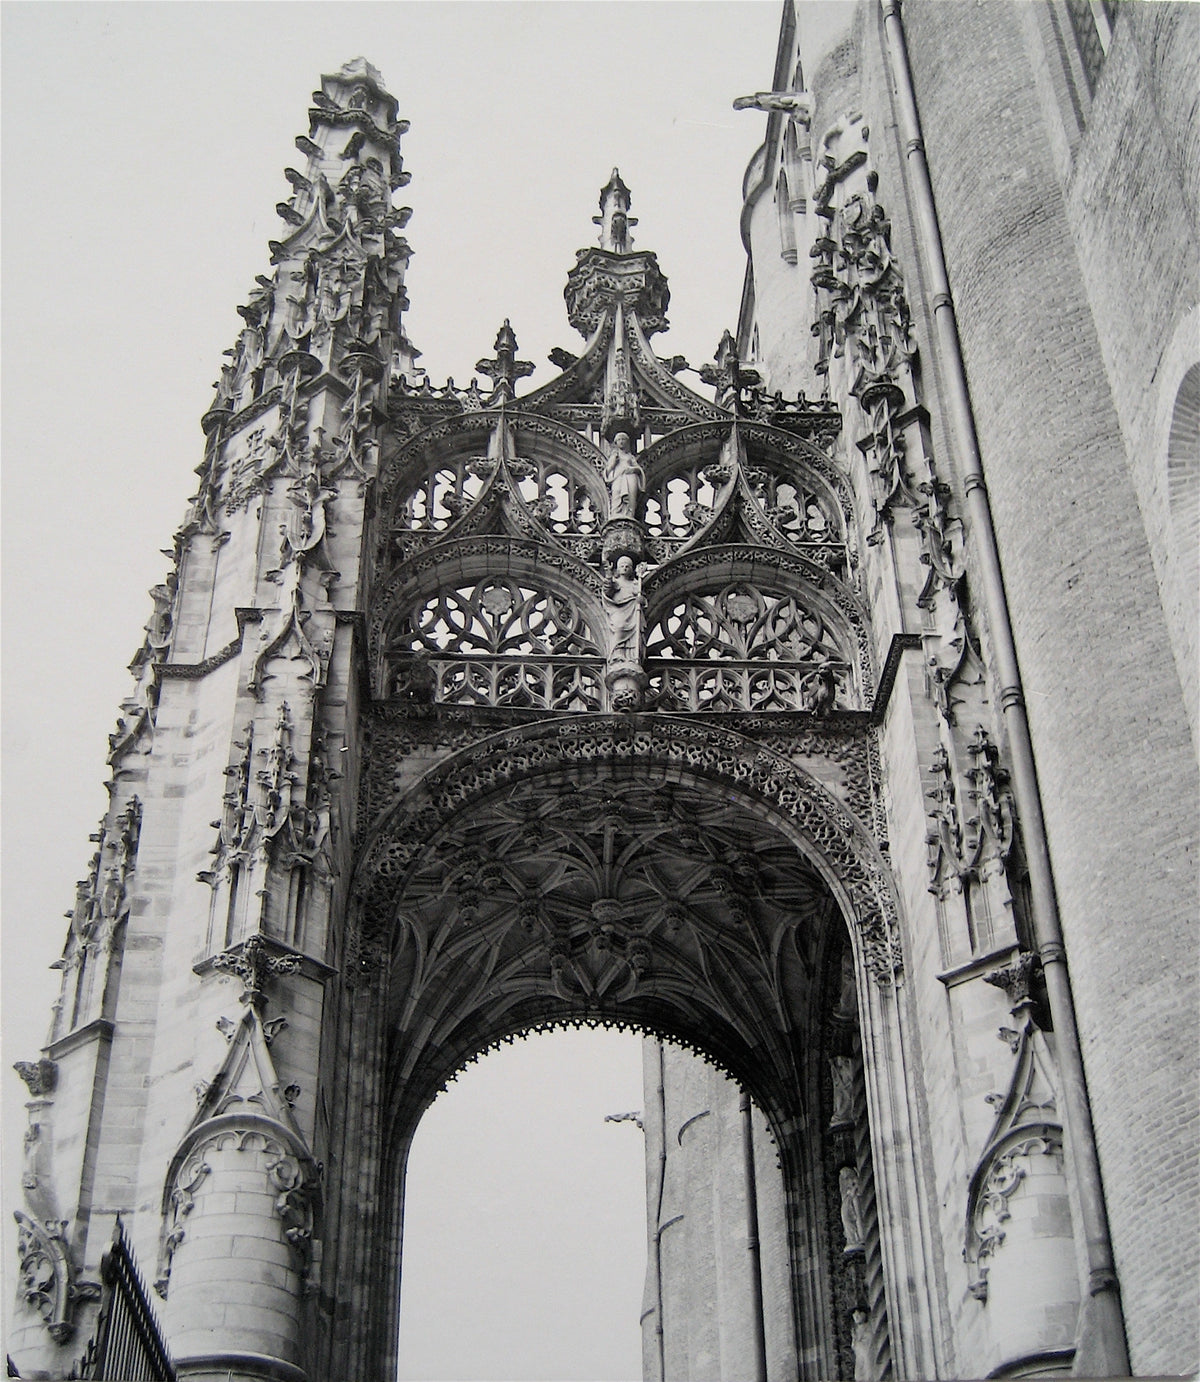 Architectural Archway  &lt;br&gt;1960s Photograph&lt;br&gt;&lt;br&gt;#16271